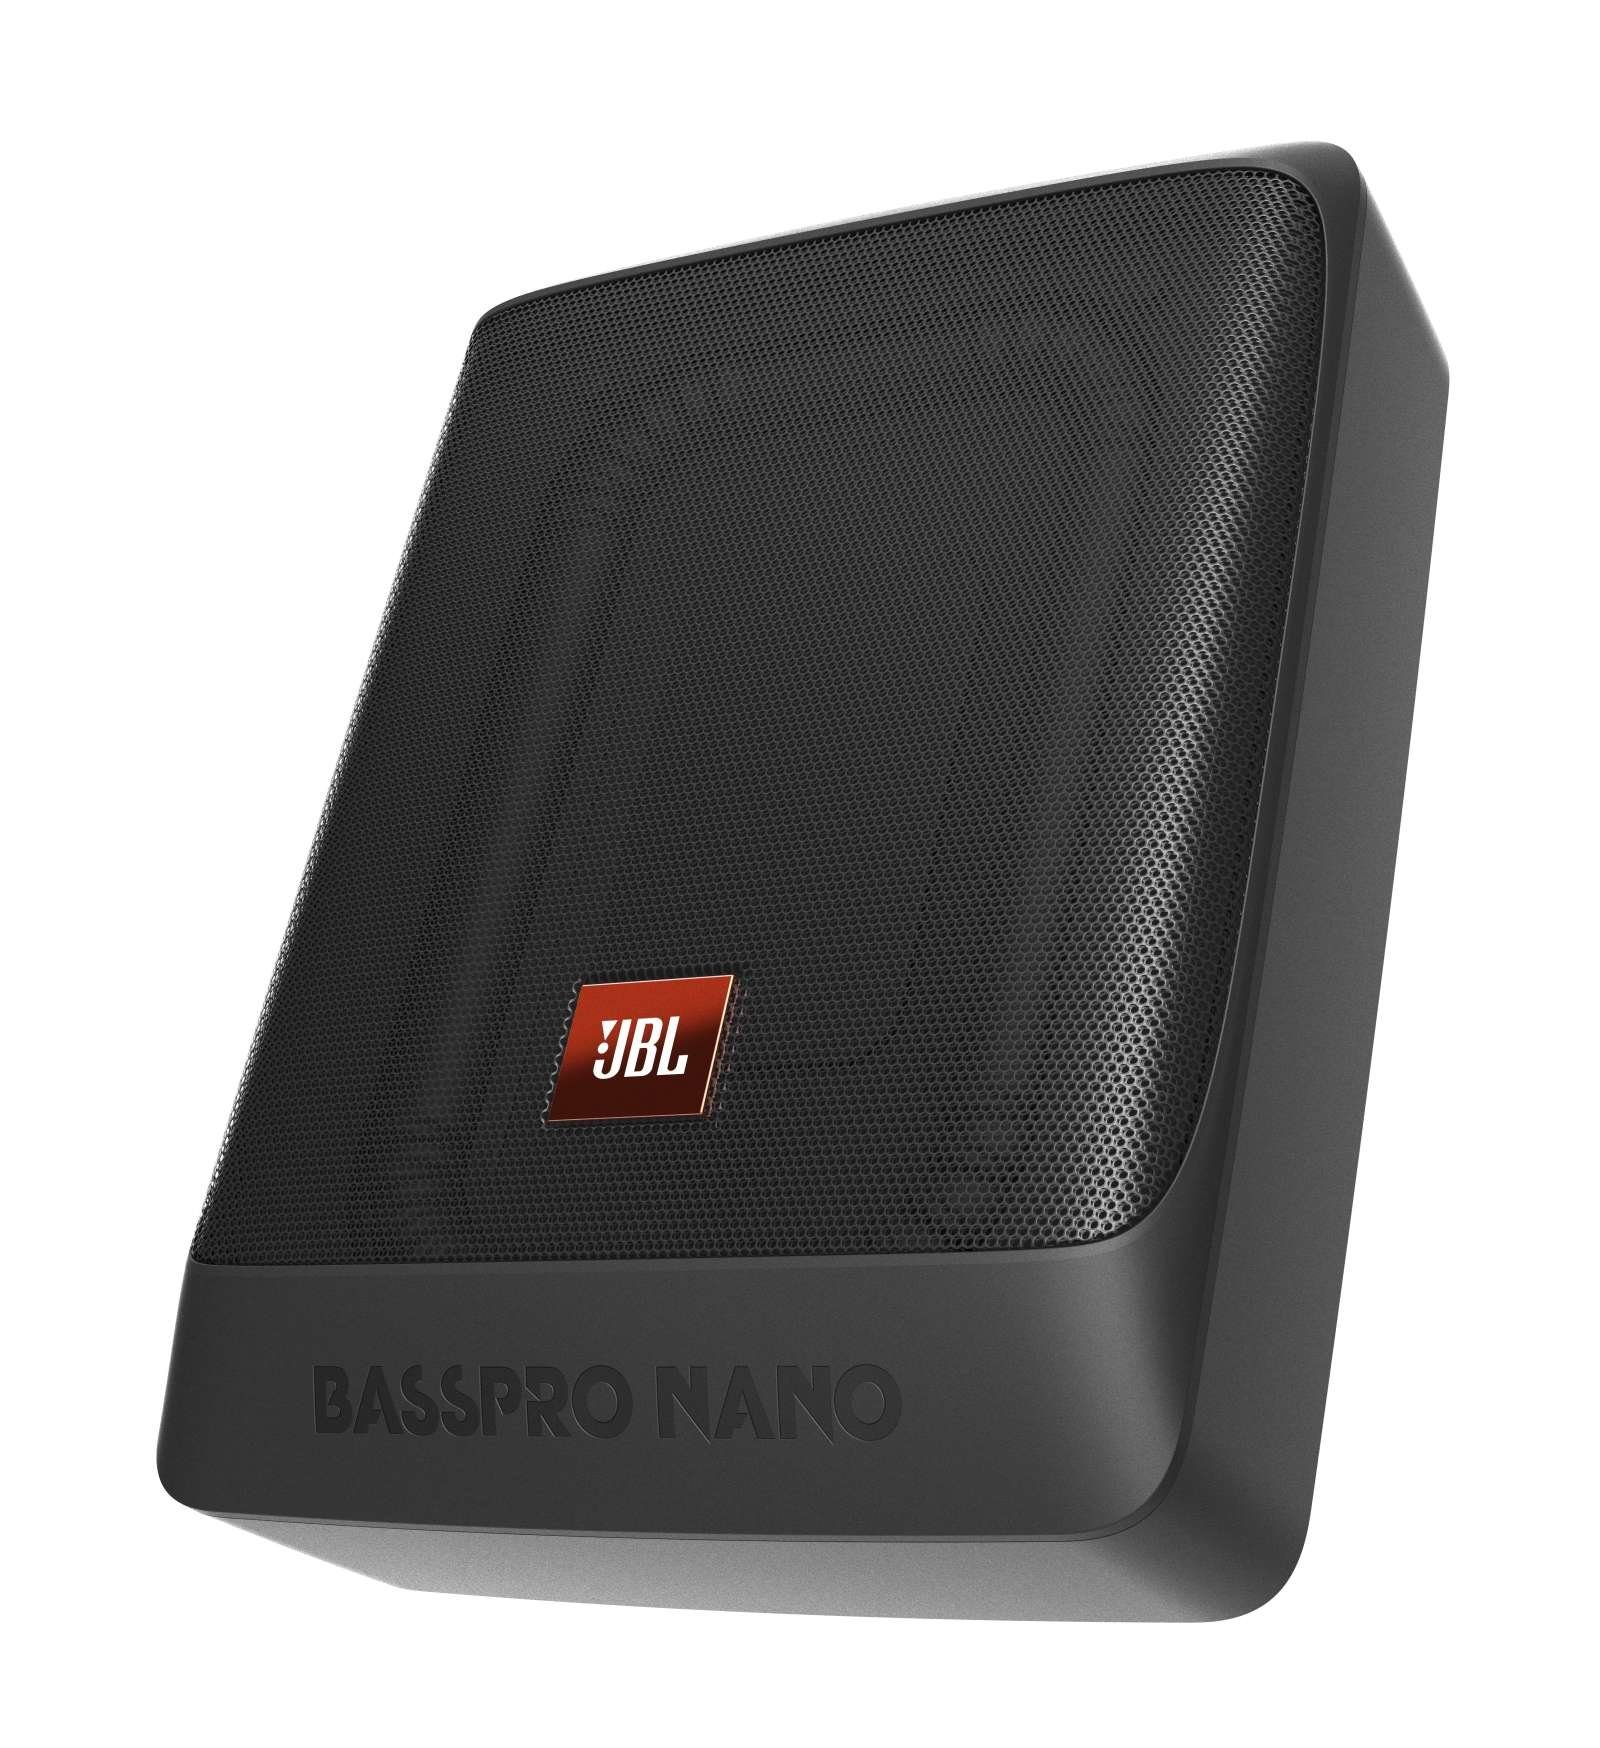 JBL JBL BassPro Nano Auto-Subwoofer | Auto-Subwoofer